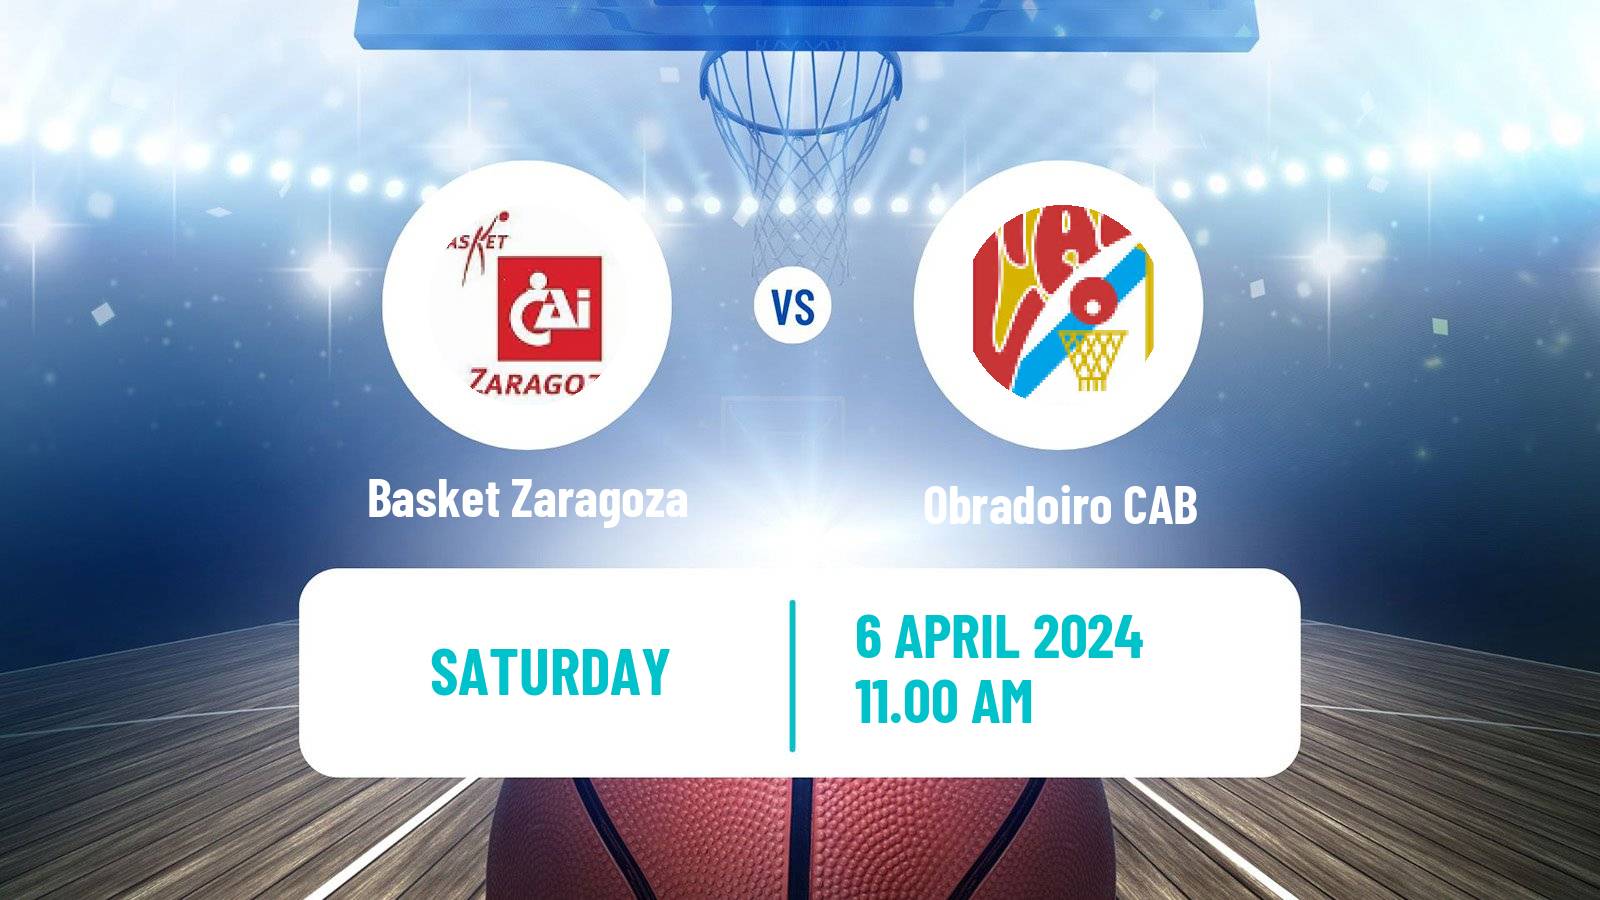 Basketball Spanish ACB League Basket Zaragoza - Obradoiro CAB